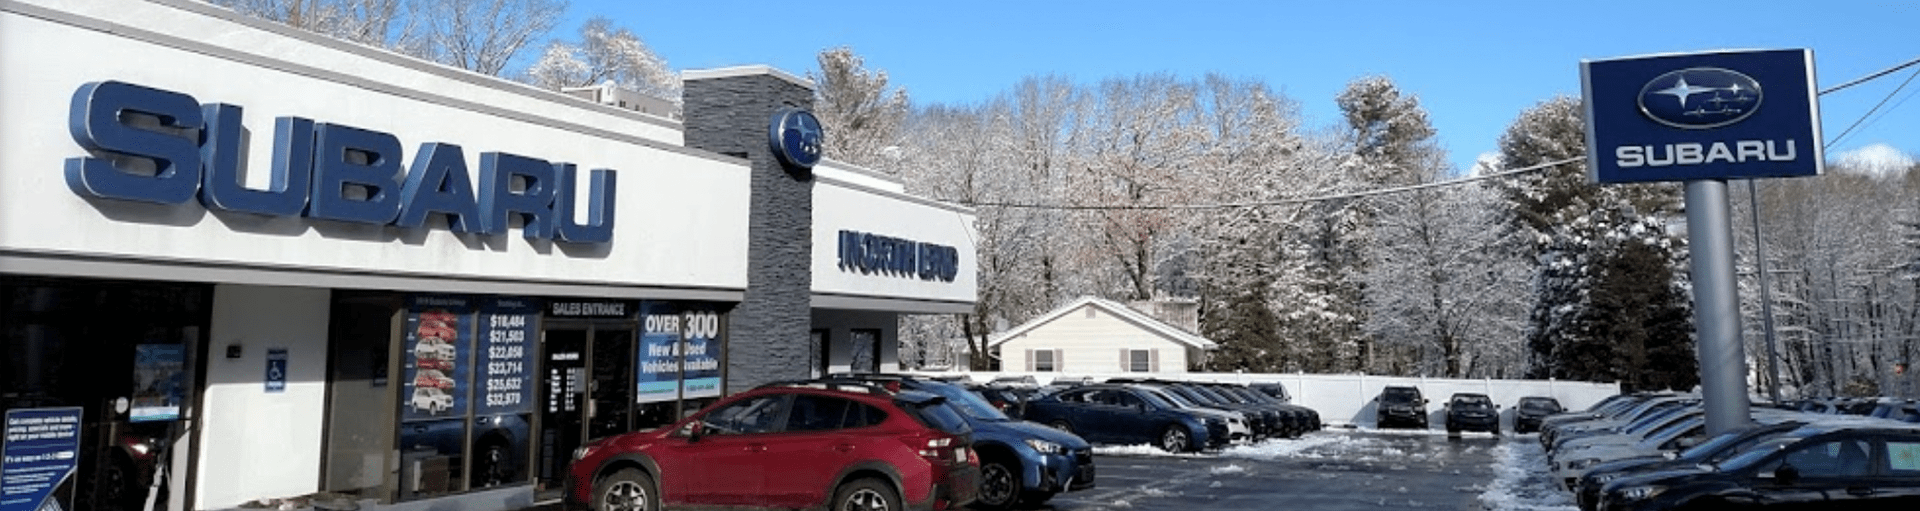 North End Subaru Recall Department